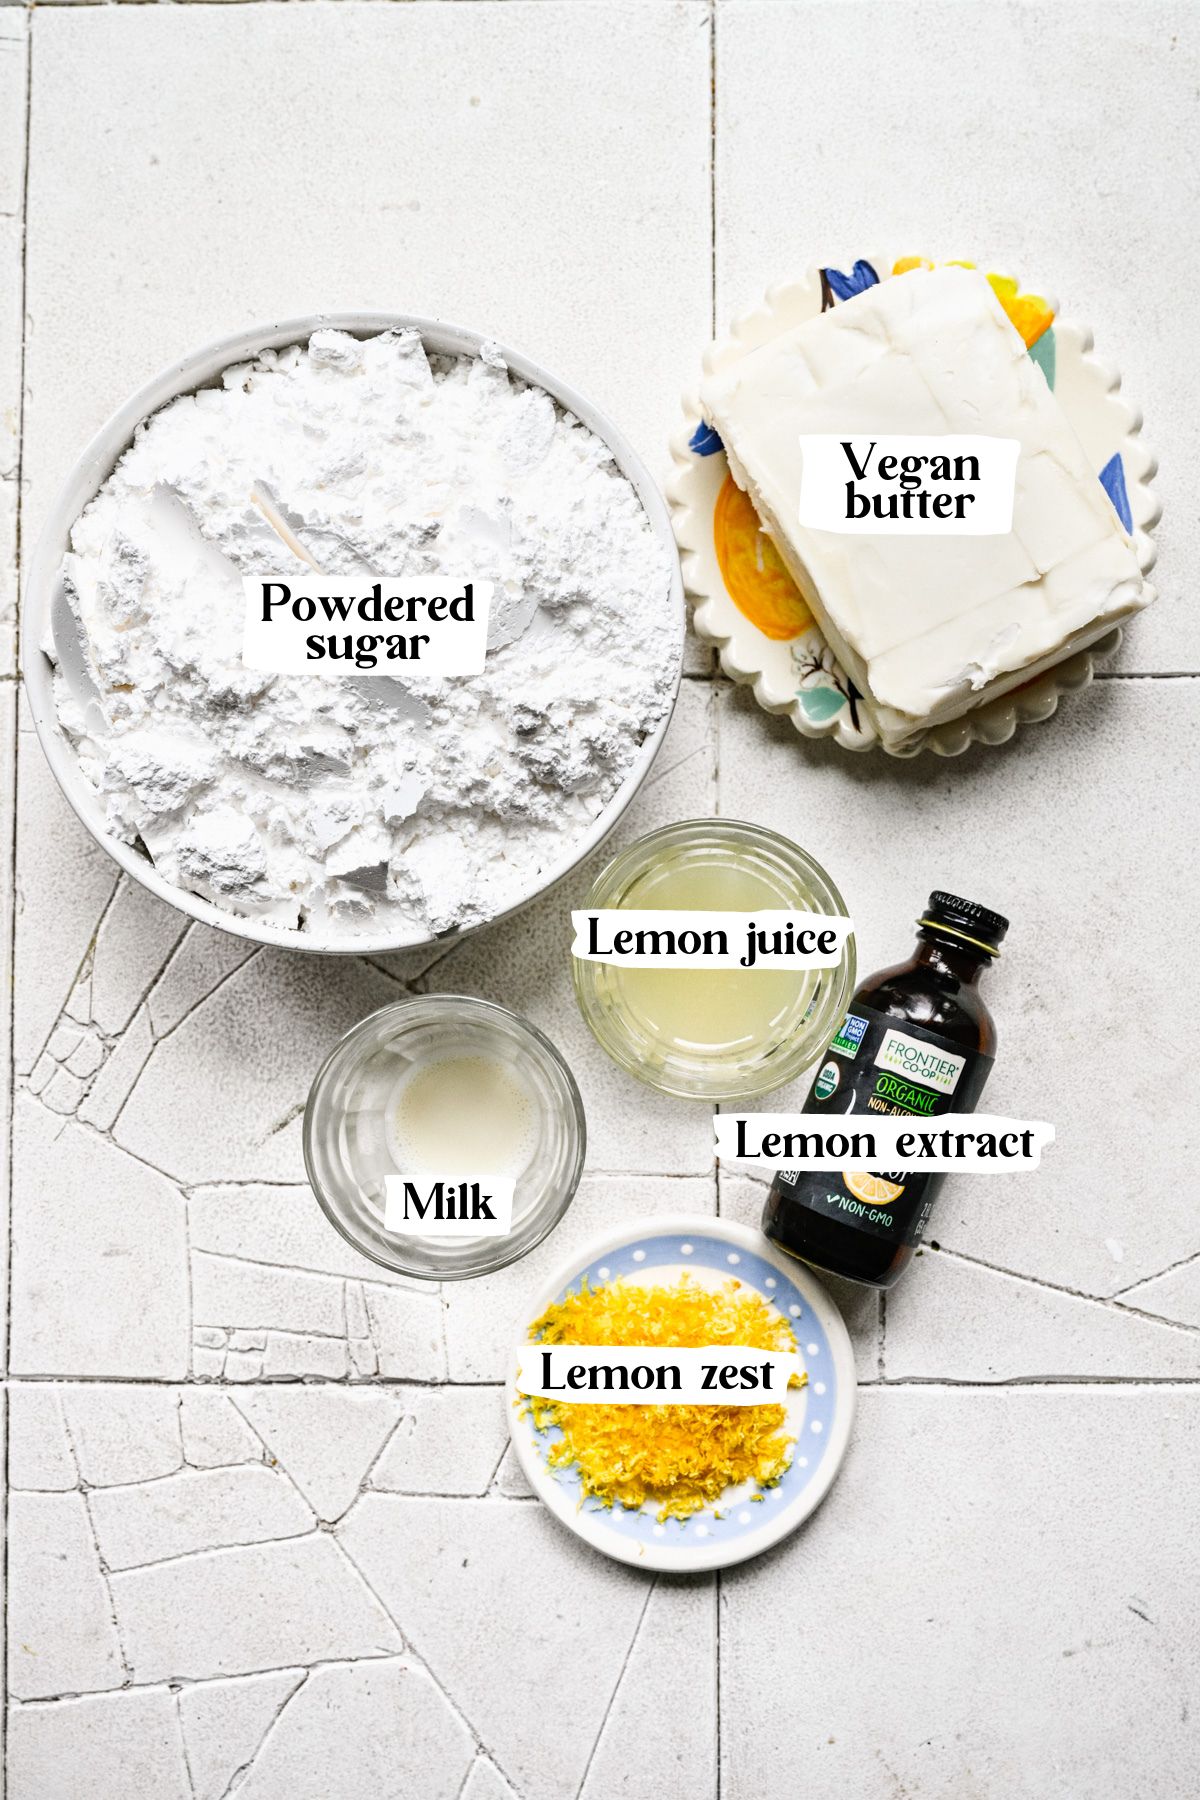 Lemon buttercream ingredients including powdered sugar and lemon zest.